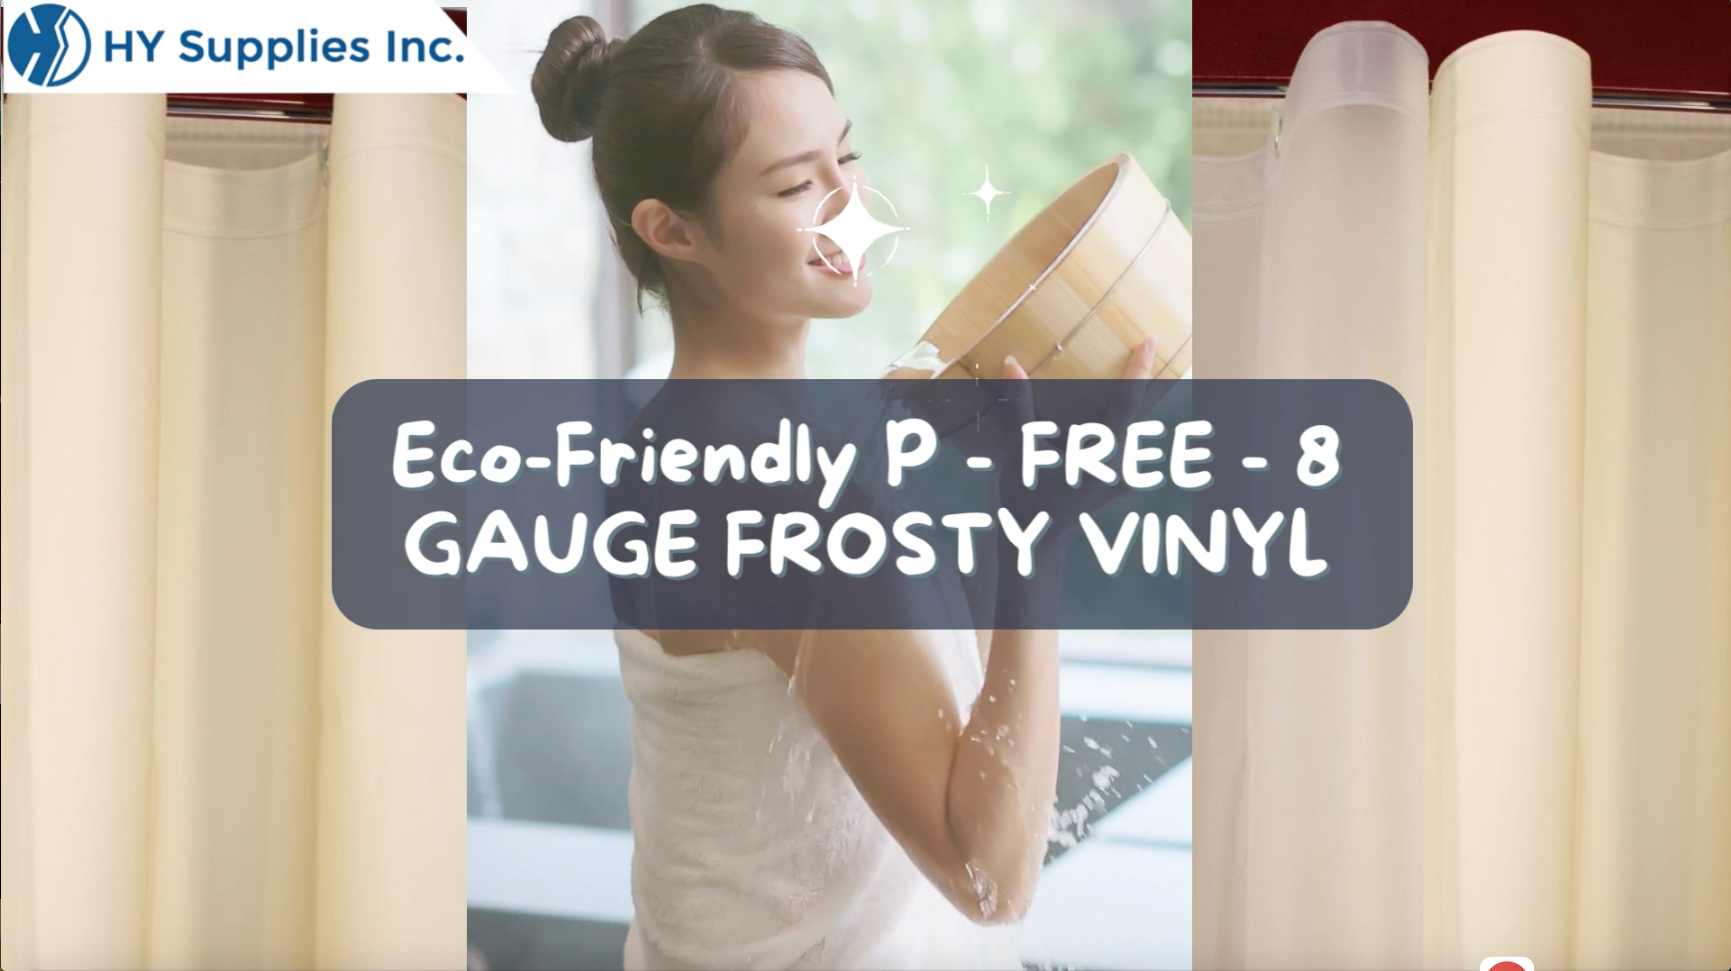 Eco-Friendly P - FREE - 8 GAUGE FROSTY VINYL